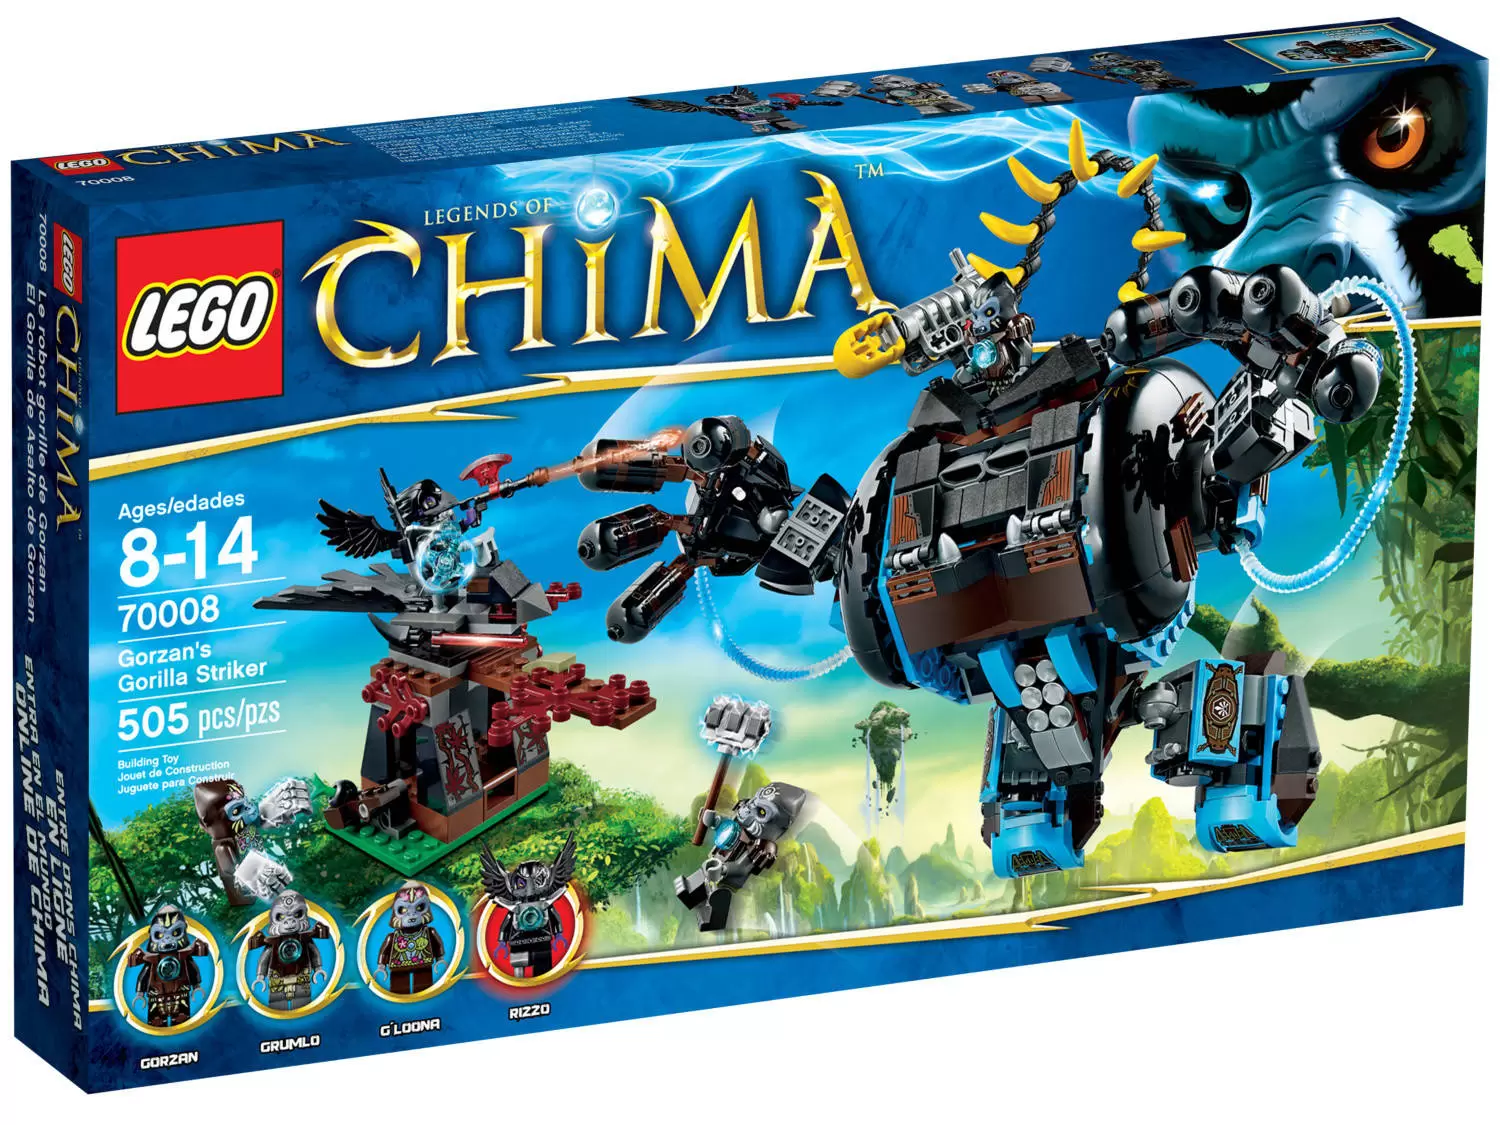 LEGO Legends of Chima - Gorzan\'s Gorilla Striker